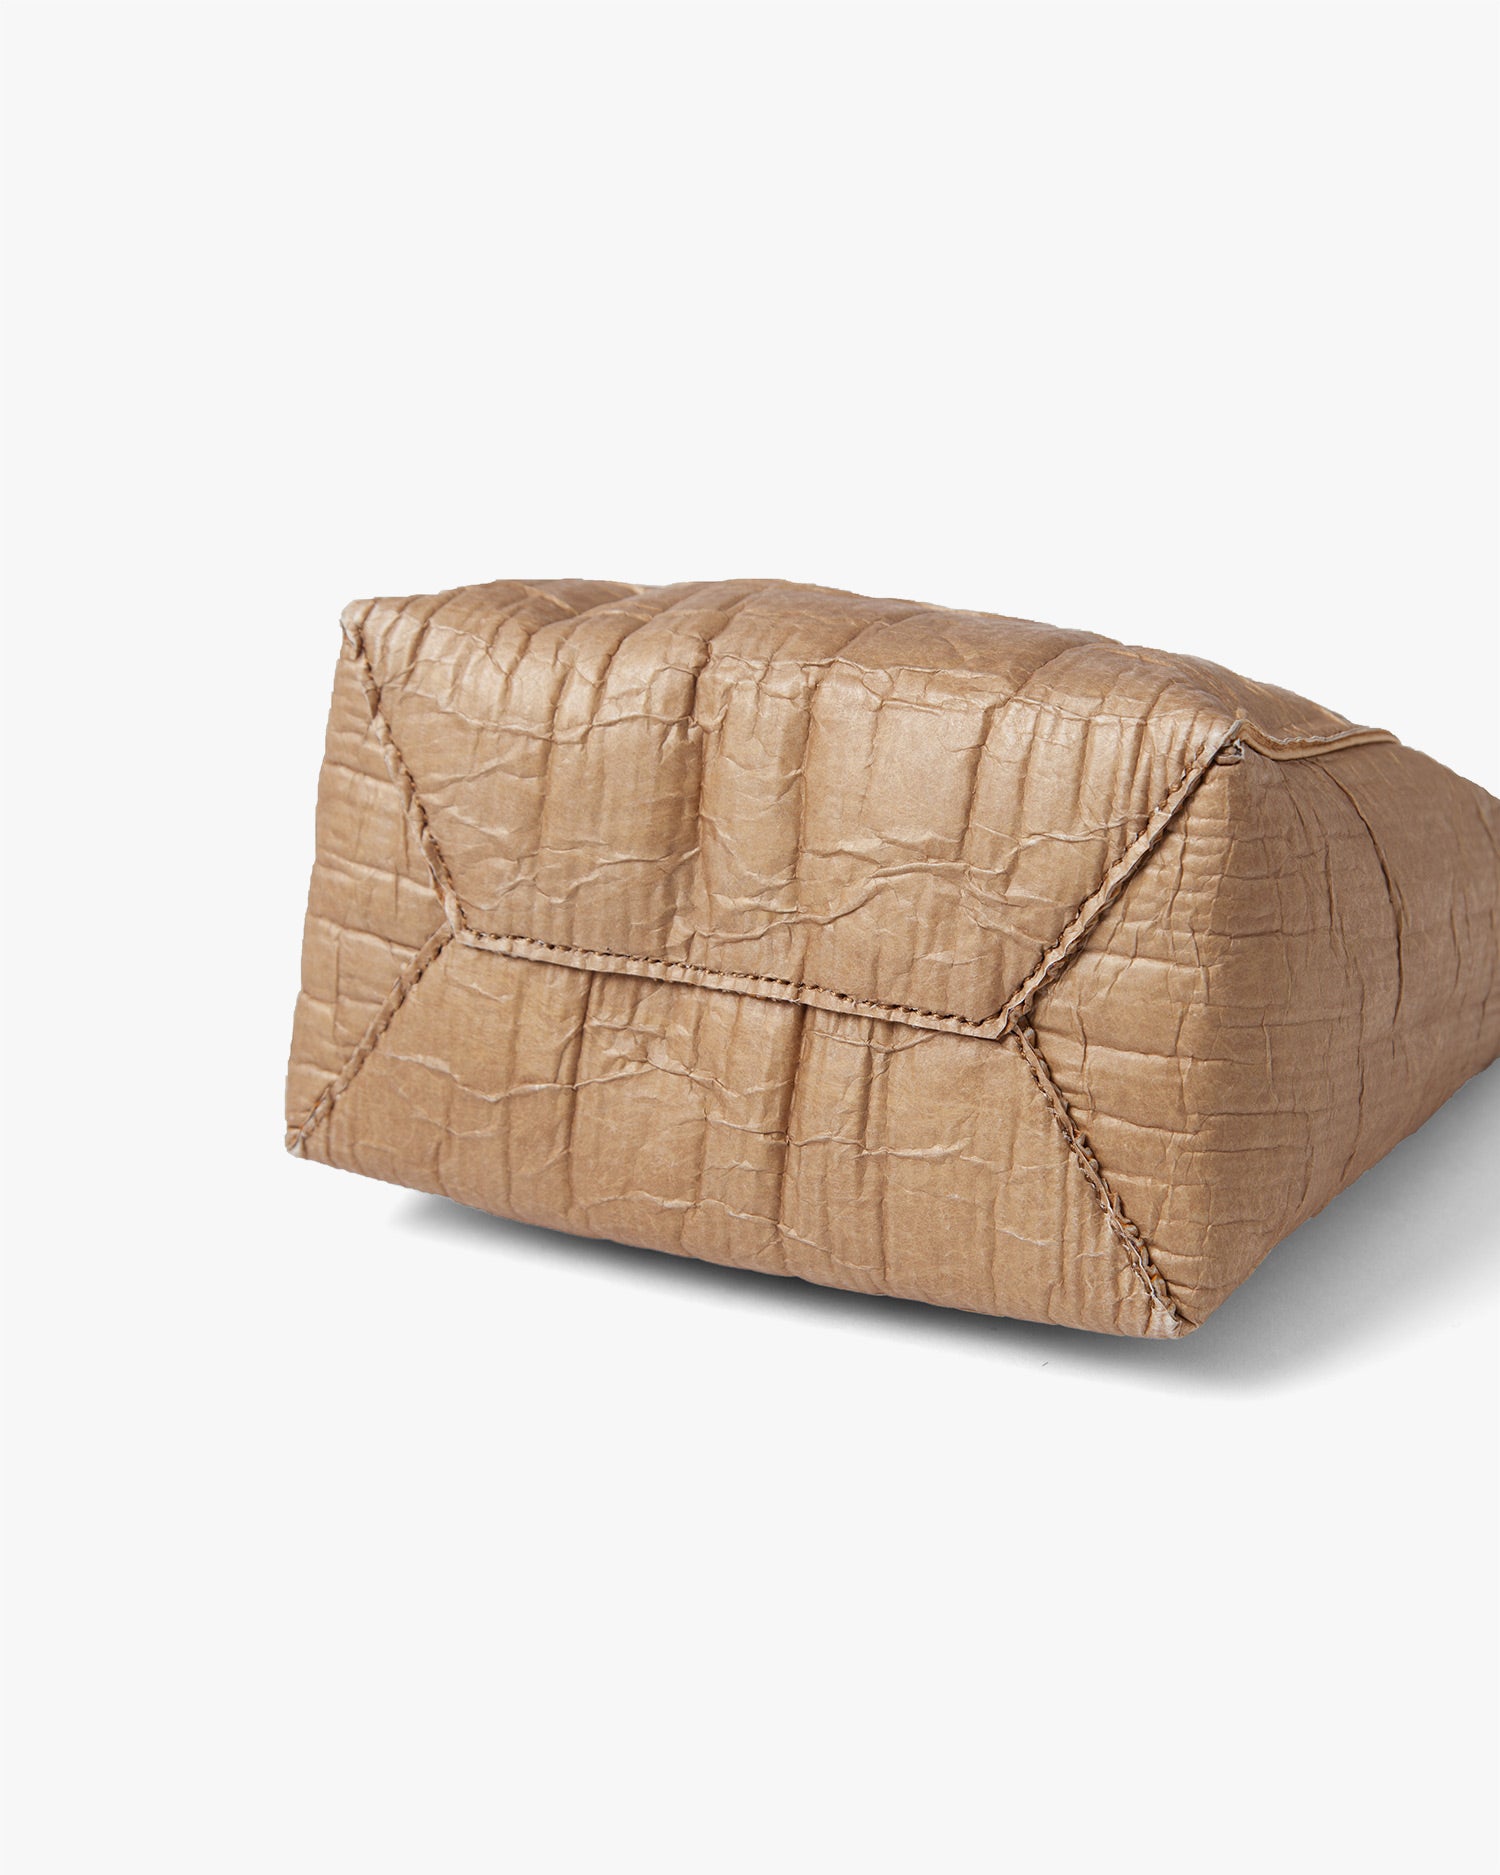 Cardboard Tote Bag